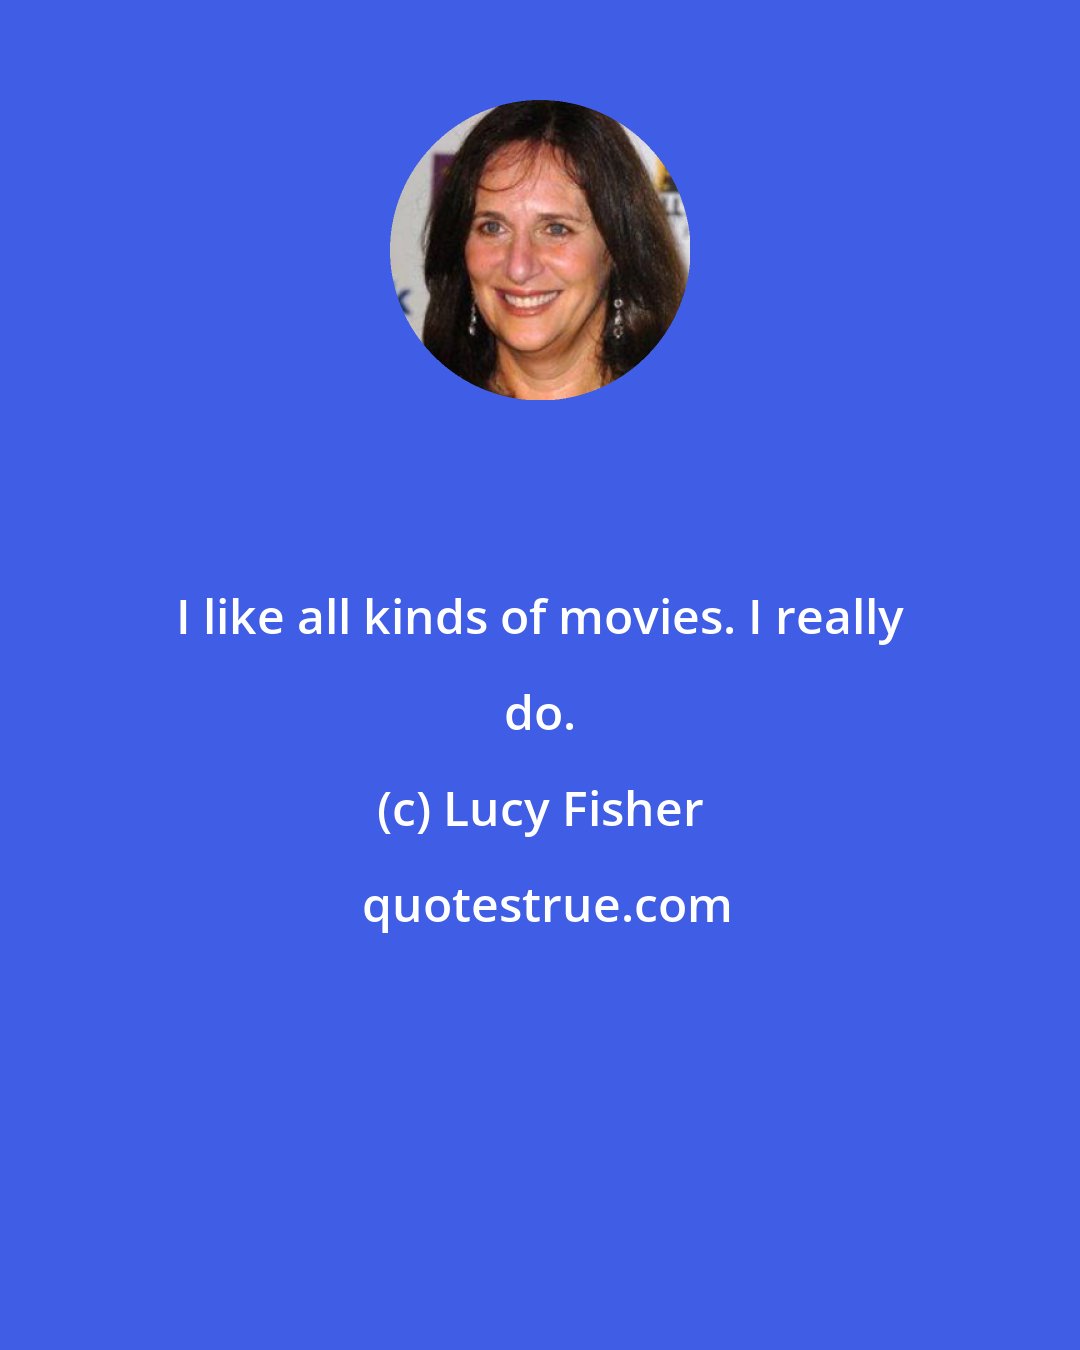 Lucy Fisher: I like all kinds of movies. I really do.